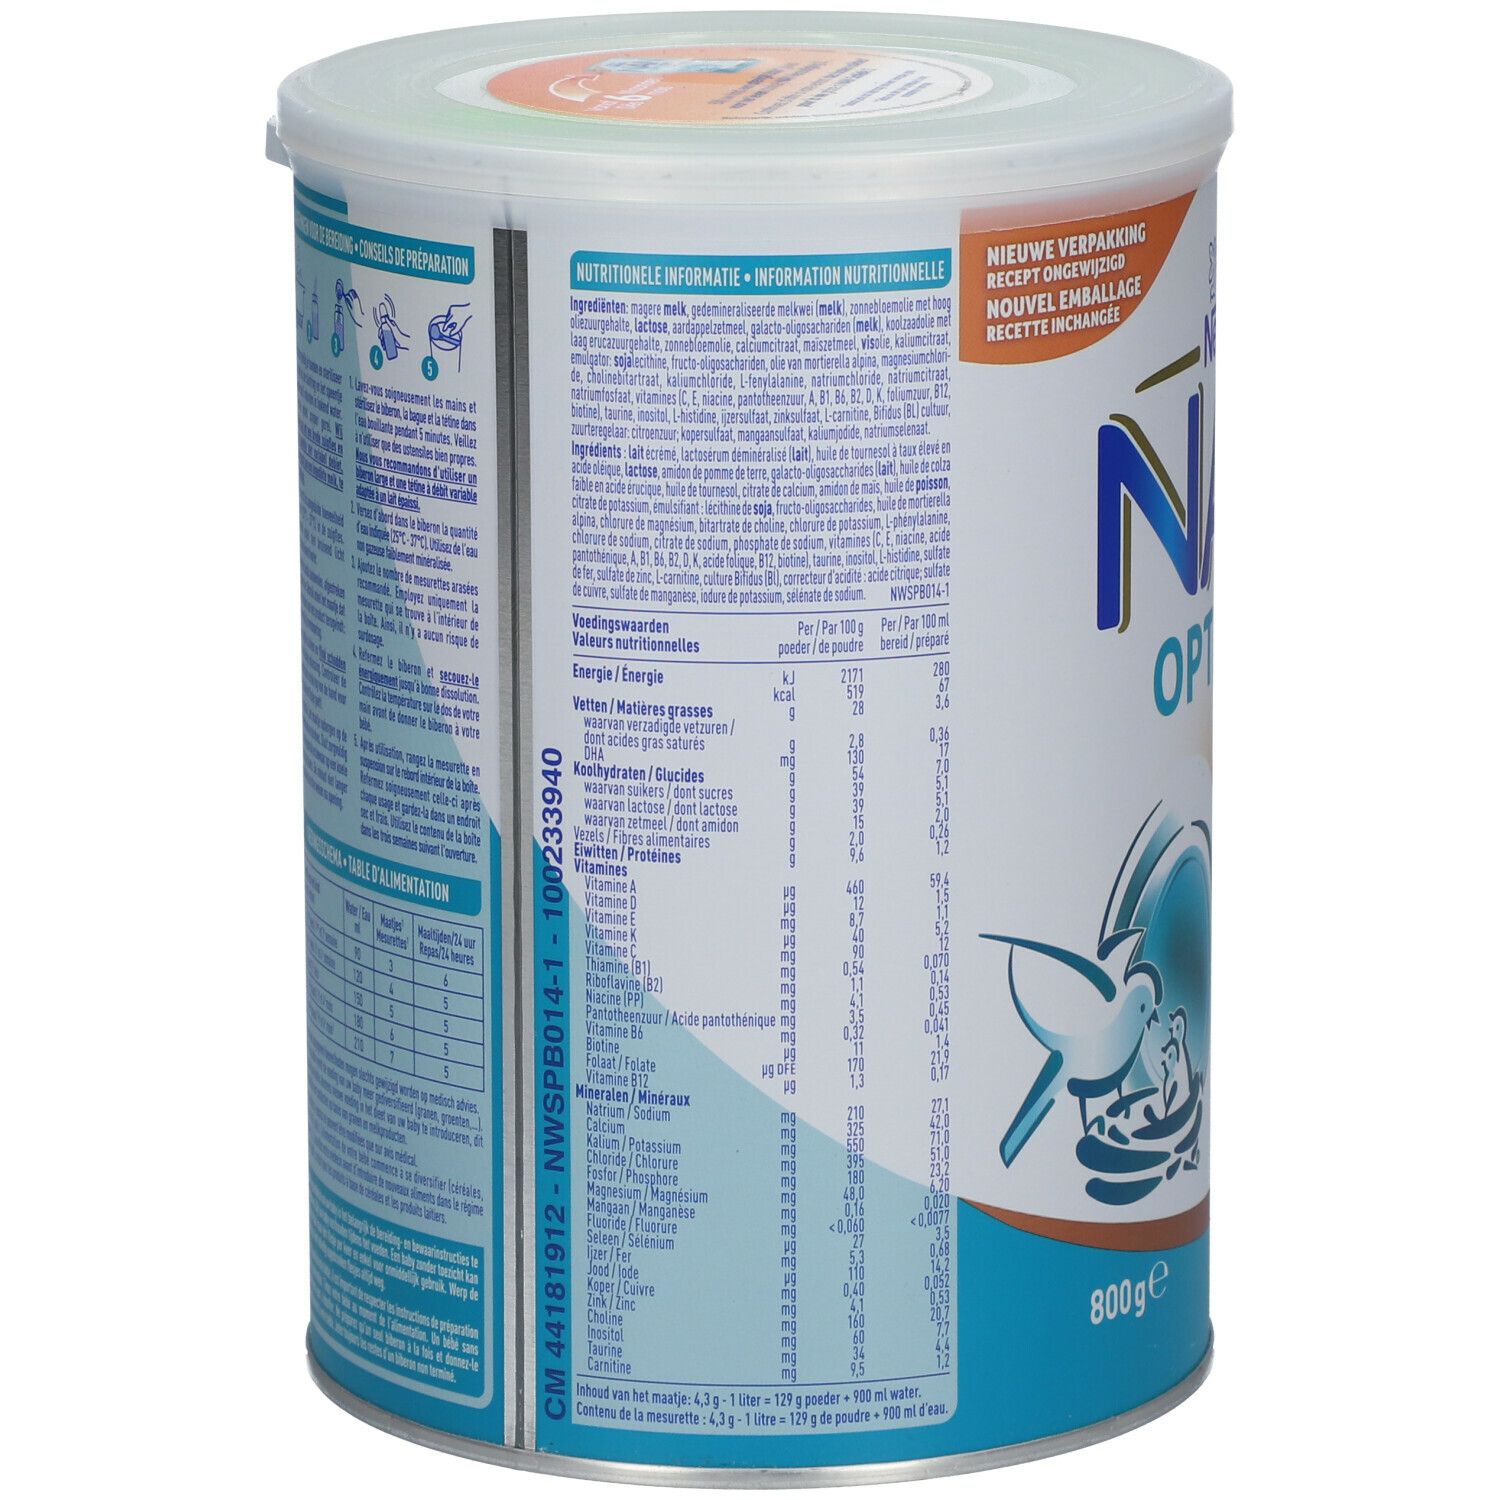 Nestlé® NAN® Saturation-Satiété 1